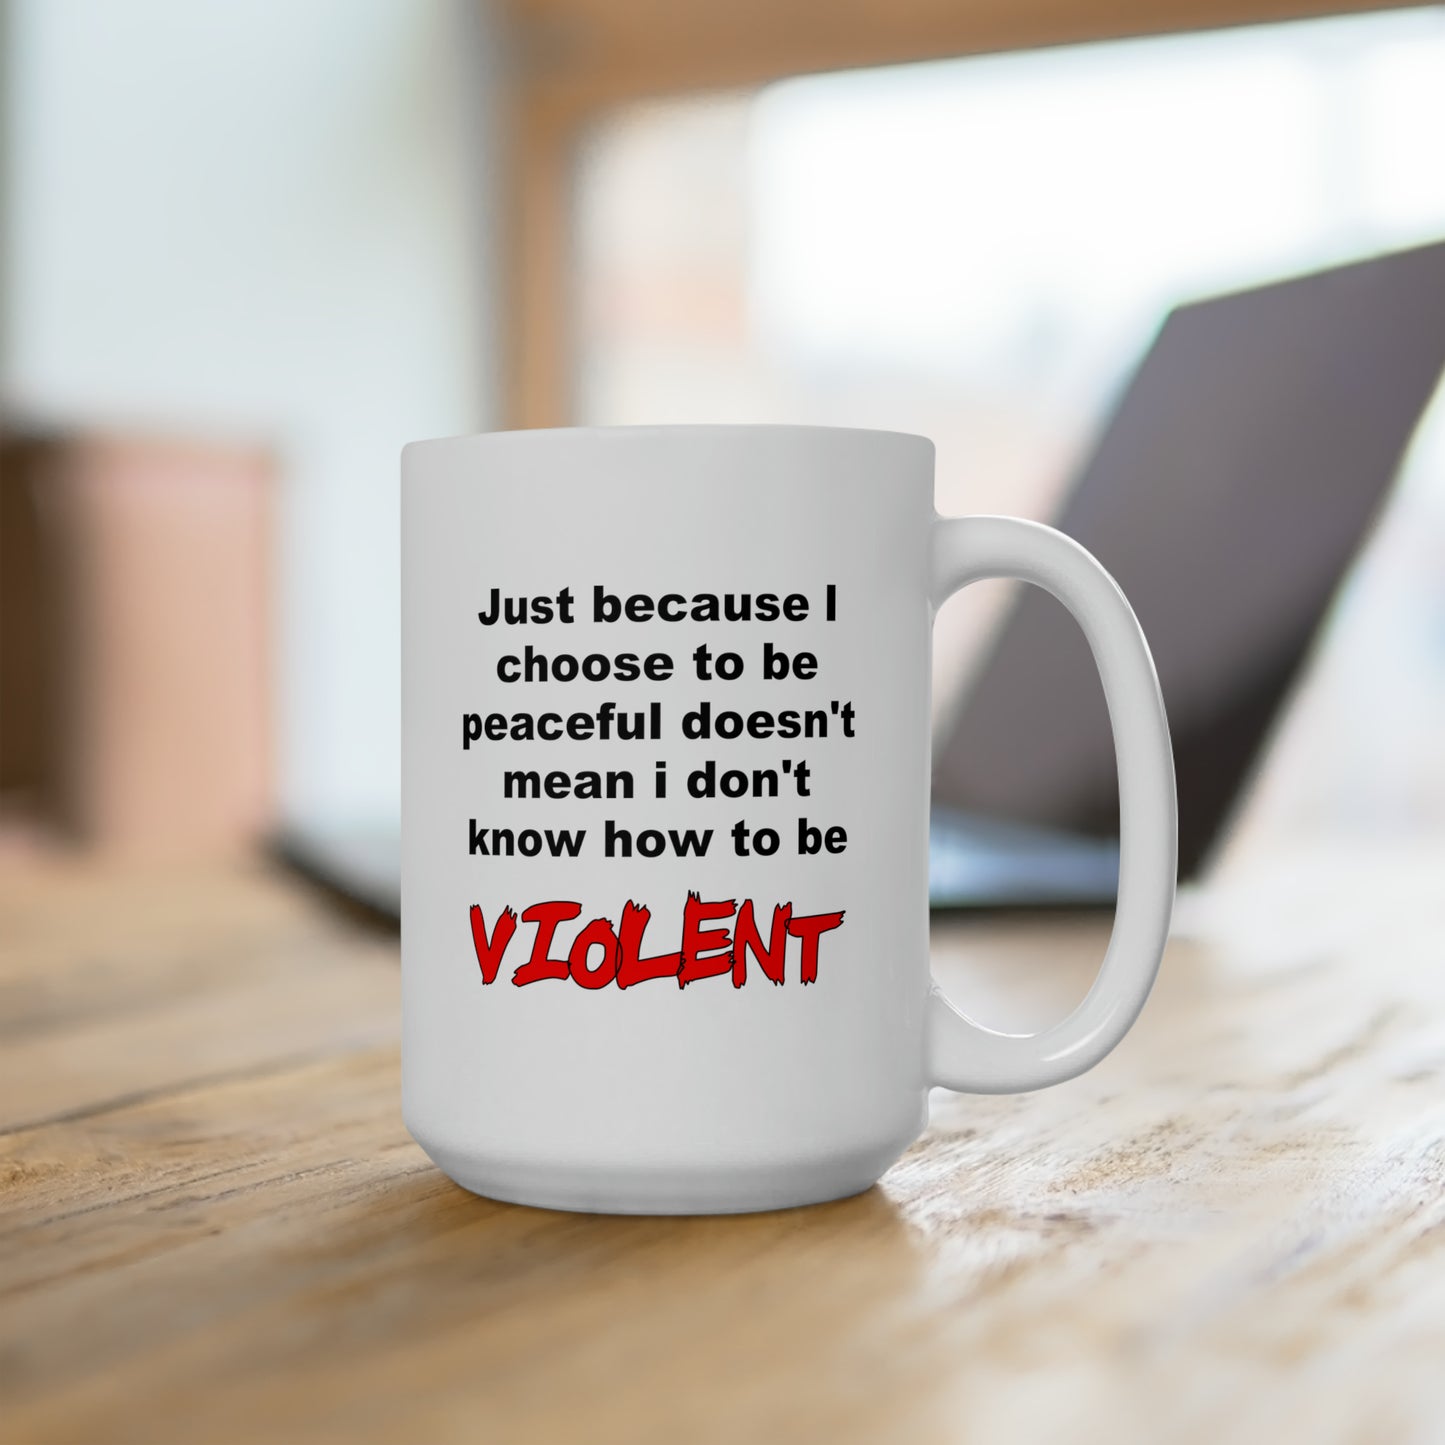 Choose to be Peaceful - Coffee Mug